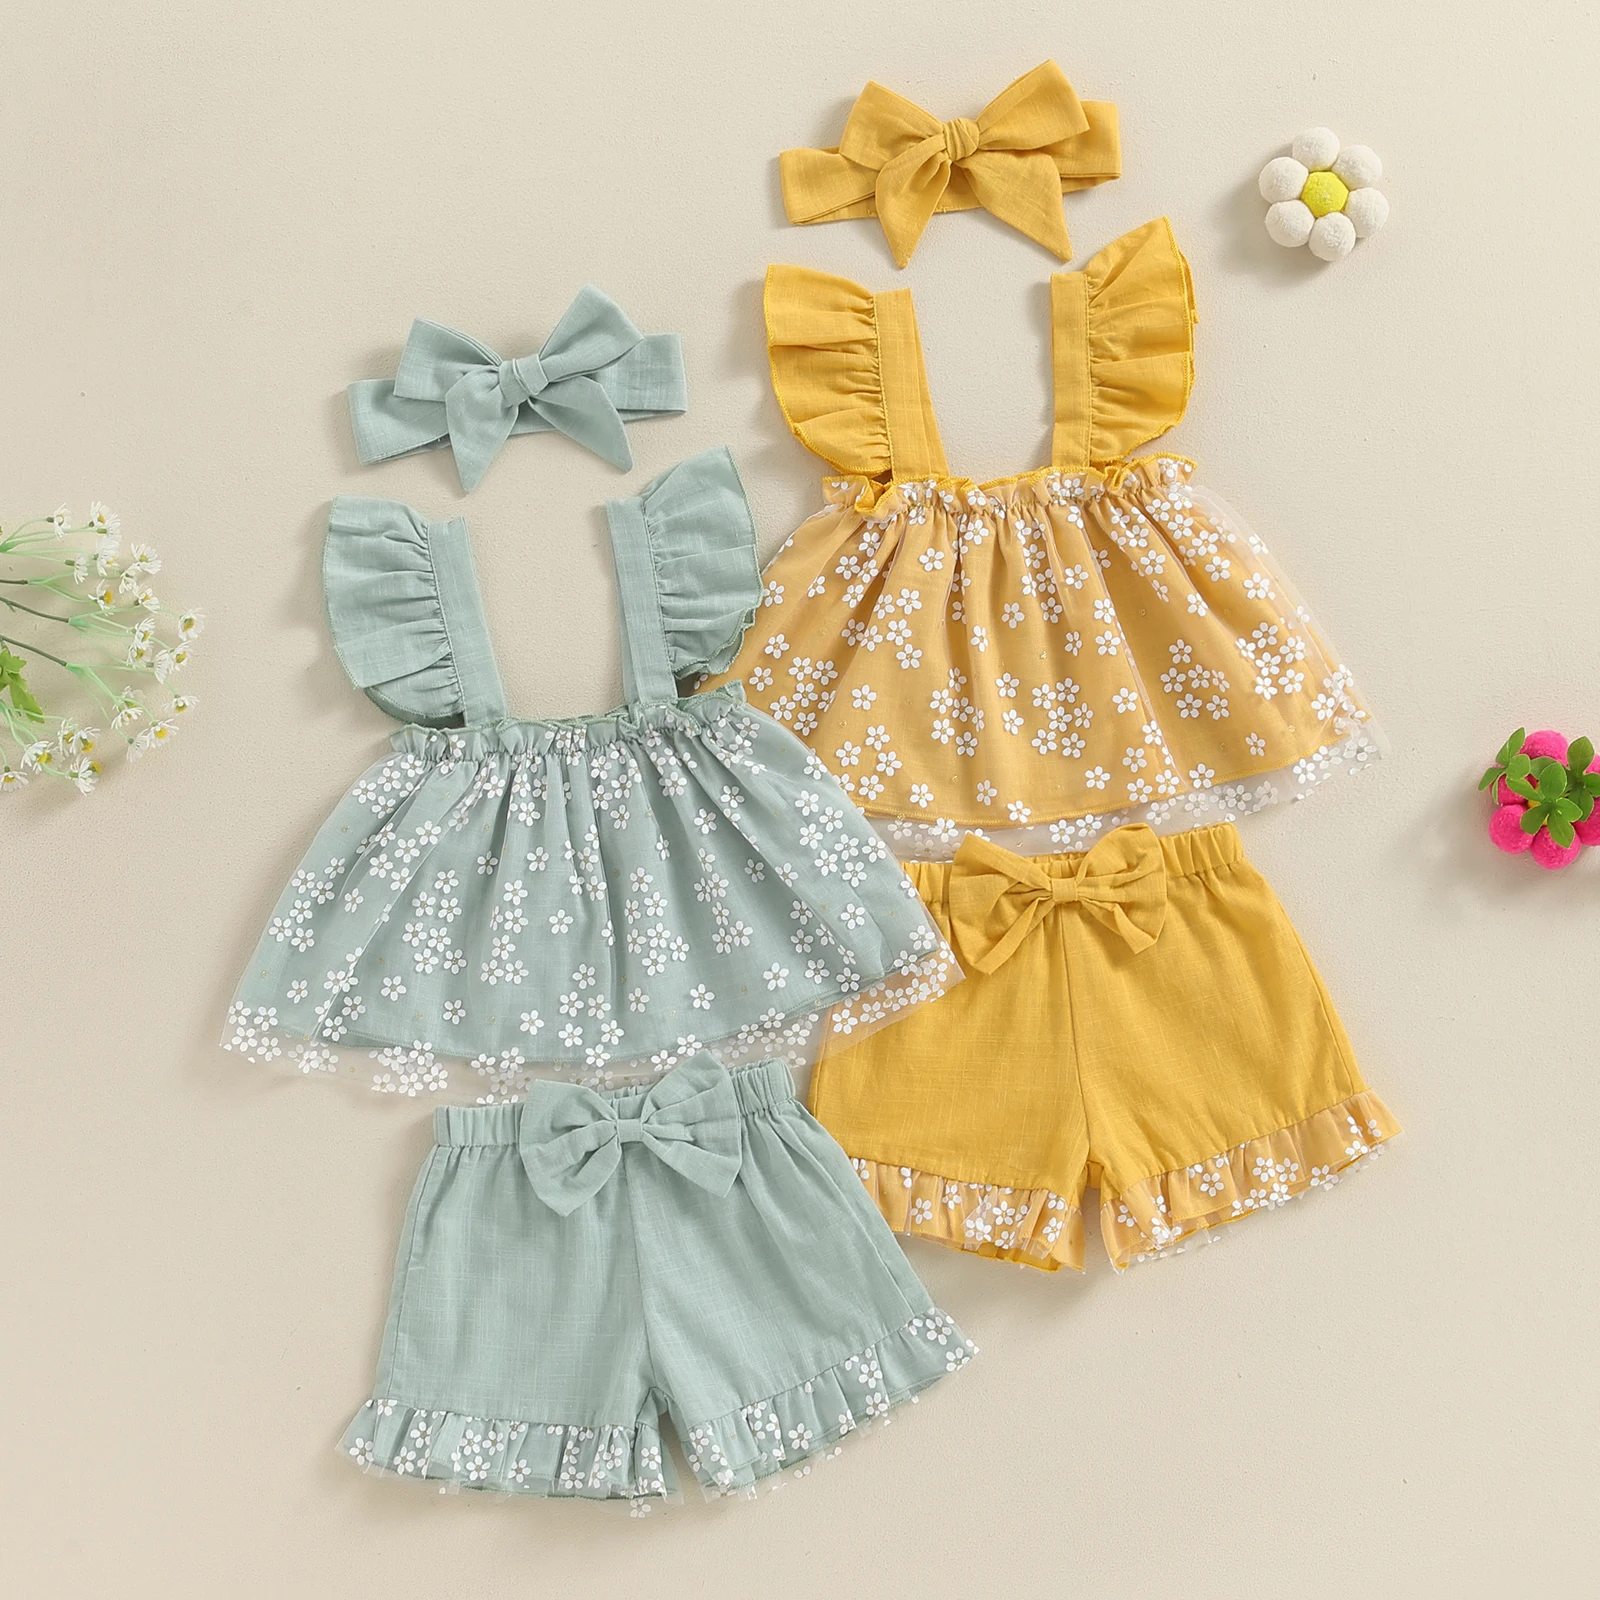 Citgeett Summer Kids Toddler Girl Outfit Floral Print Mesh Fly Sleeve Tops Bow Elastic Waist Shorts Headband Clothes Set